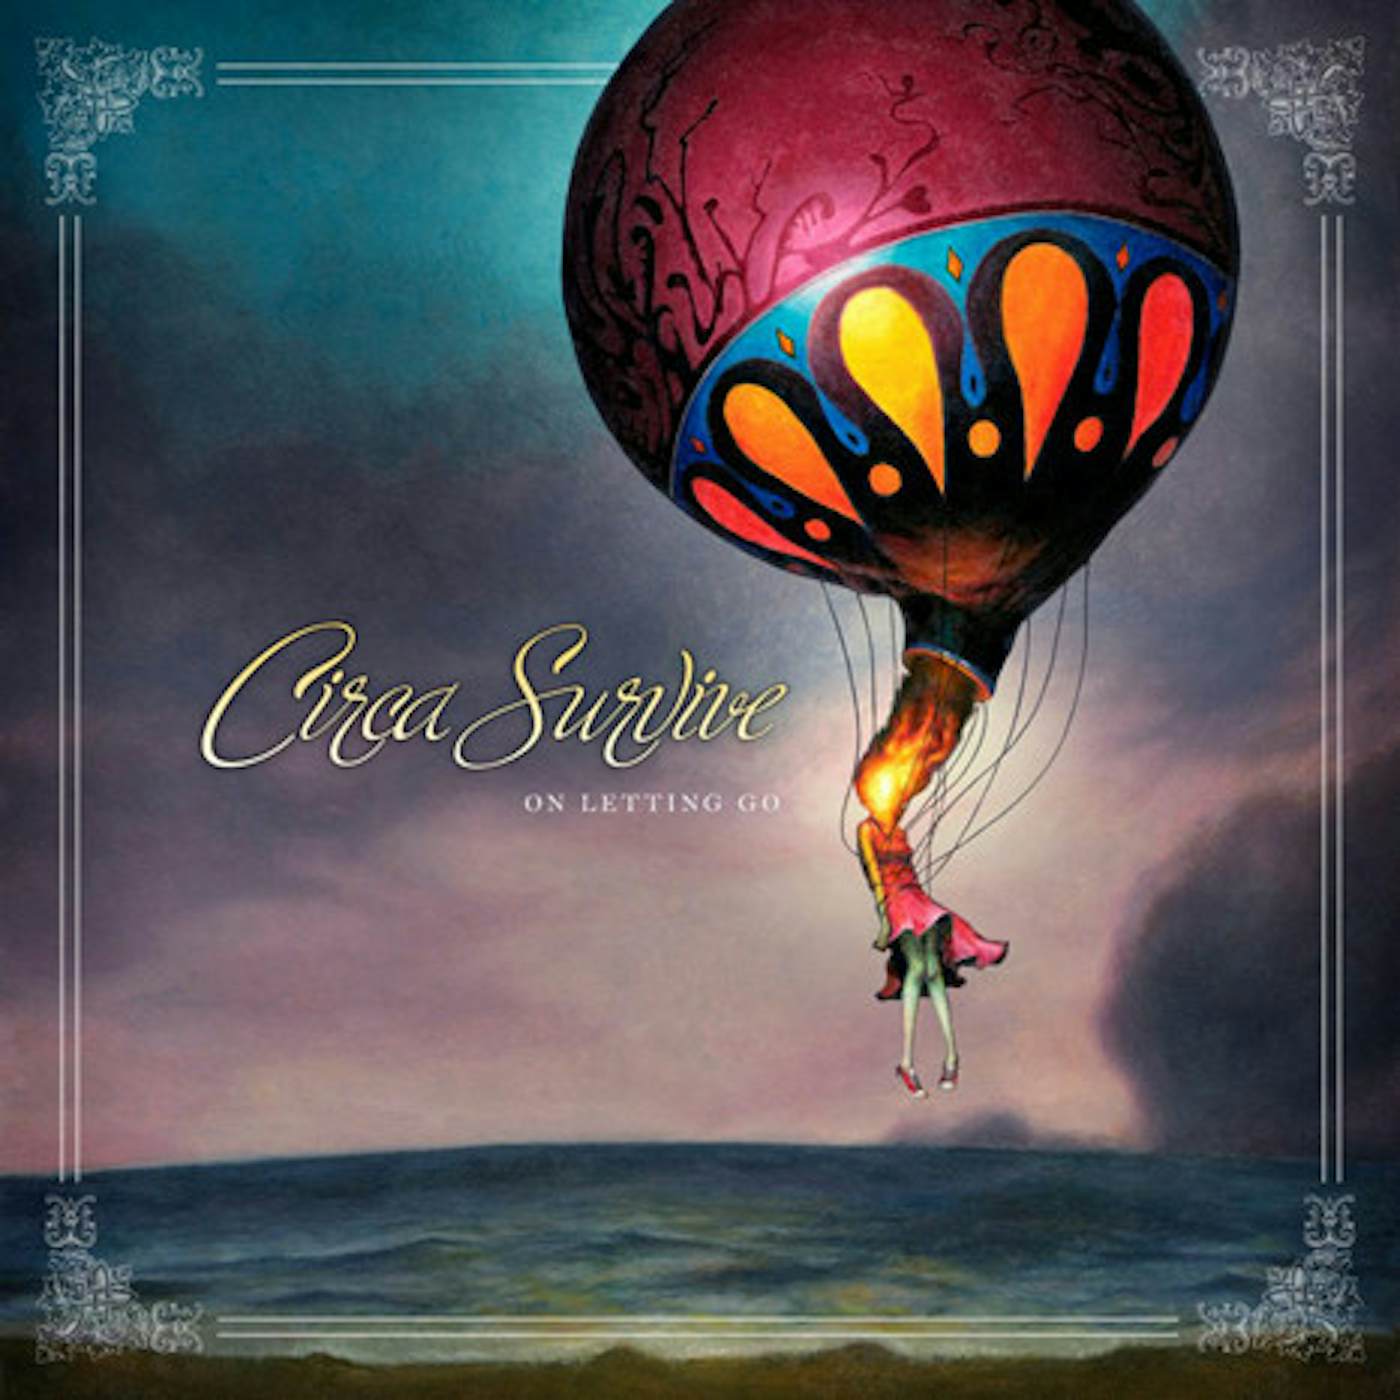 Circa Survive On Letting Go: Deluxe Ten Year Edition Vinyl Record